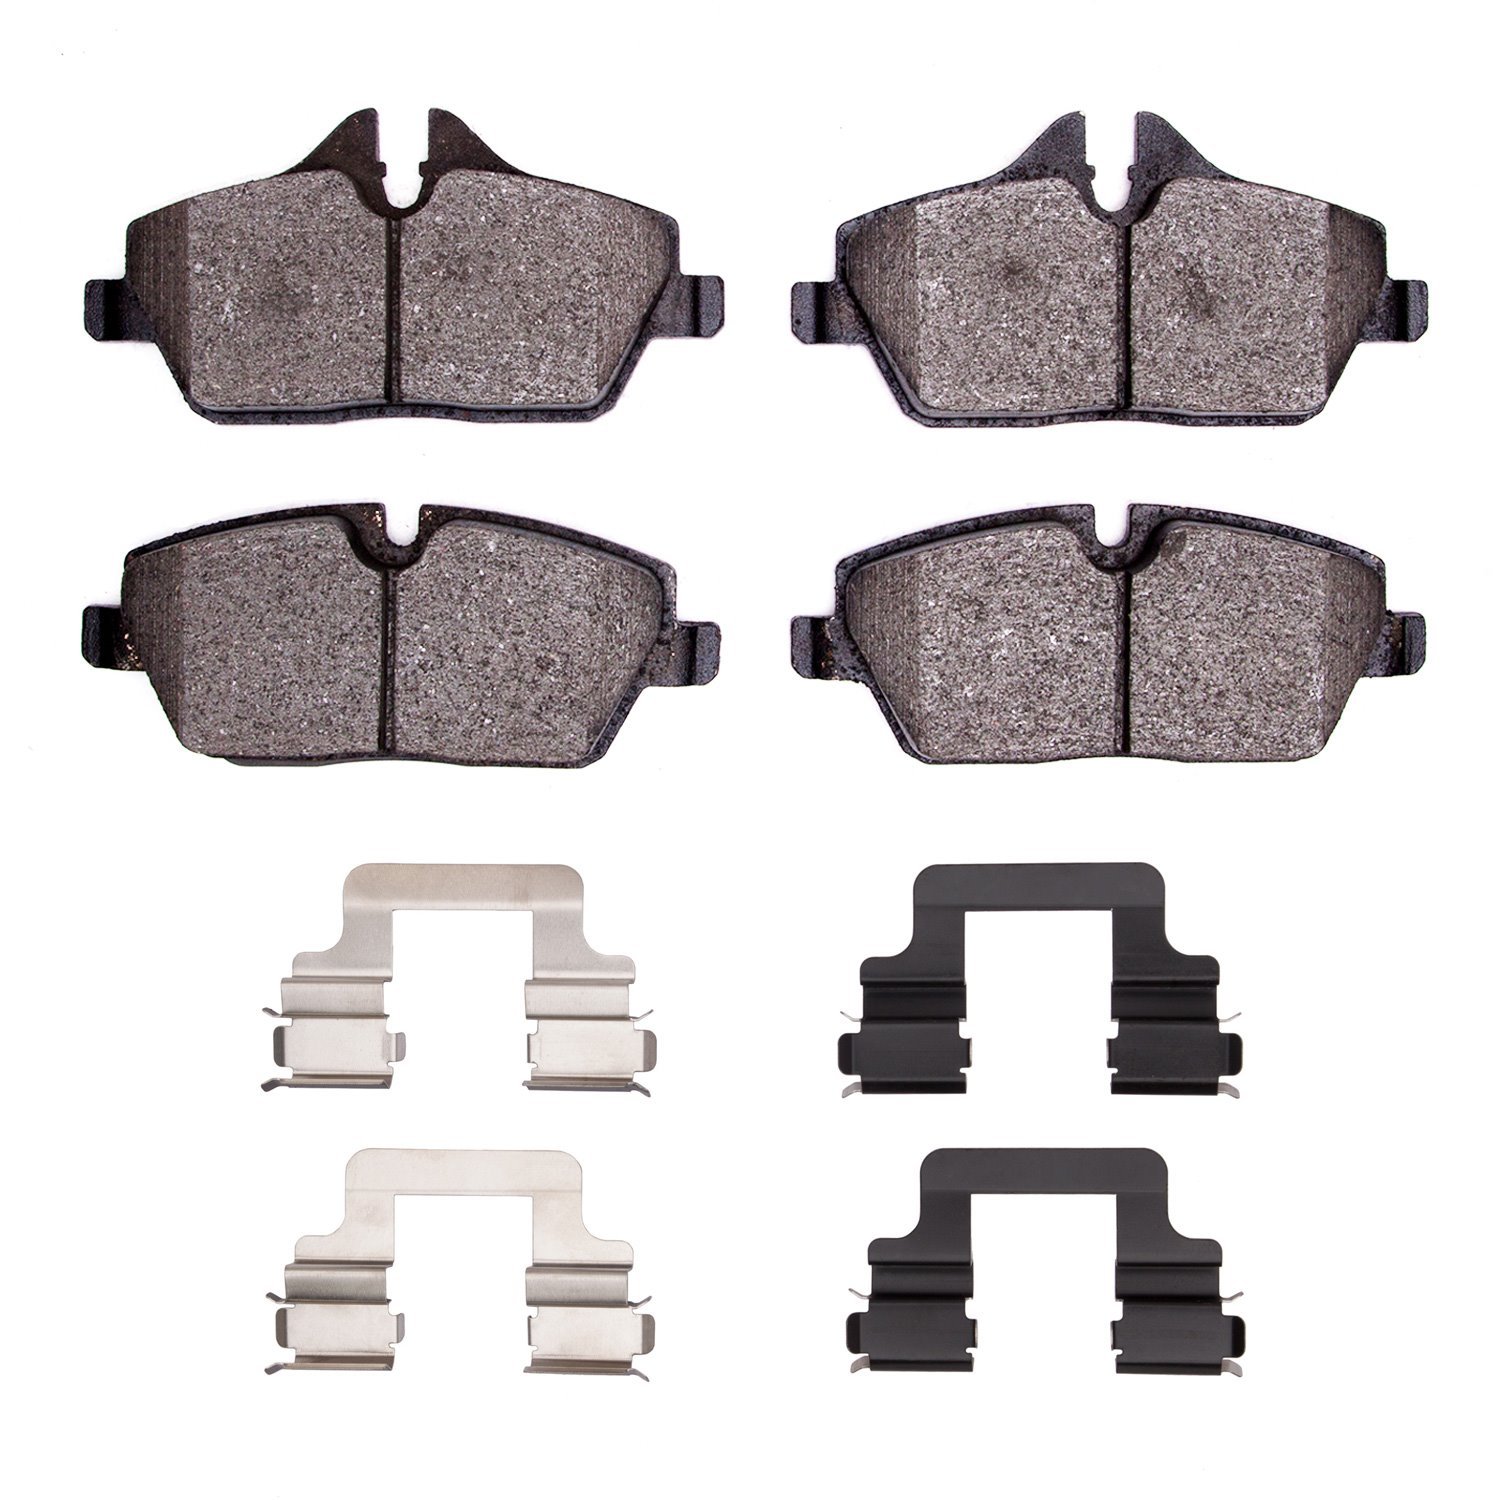 Performance Sport Brake Pads & Hardware Kit, Fits Select Fits Multiple Makes/Models, Position: Front